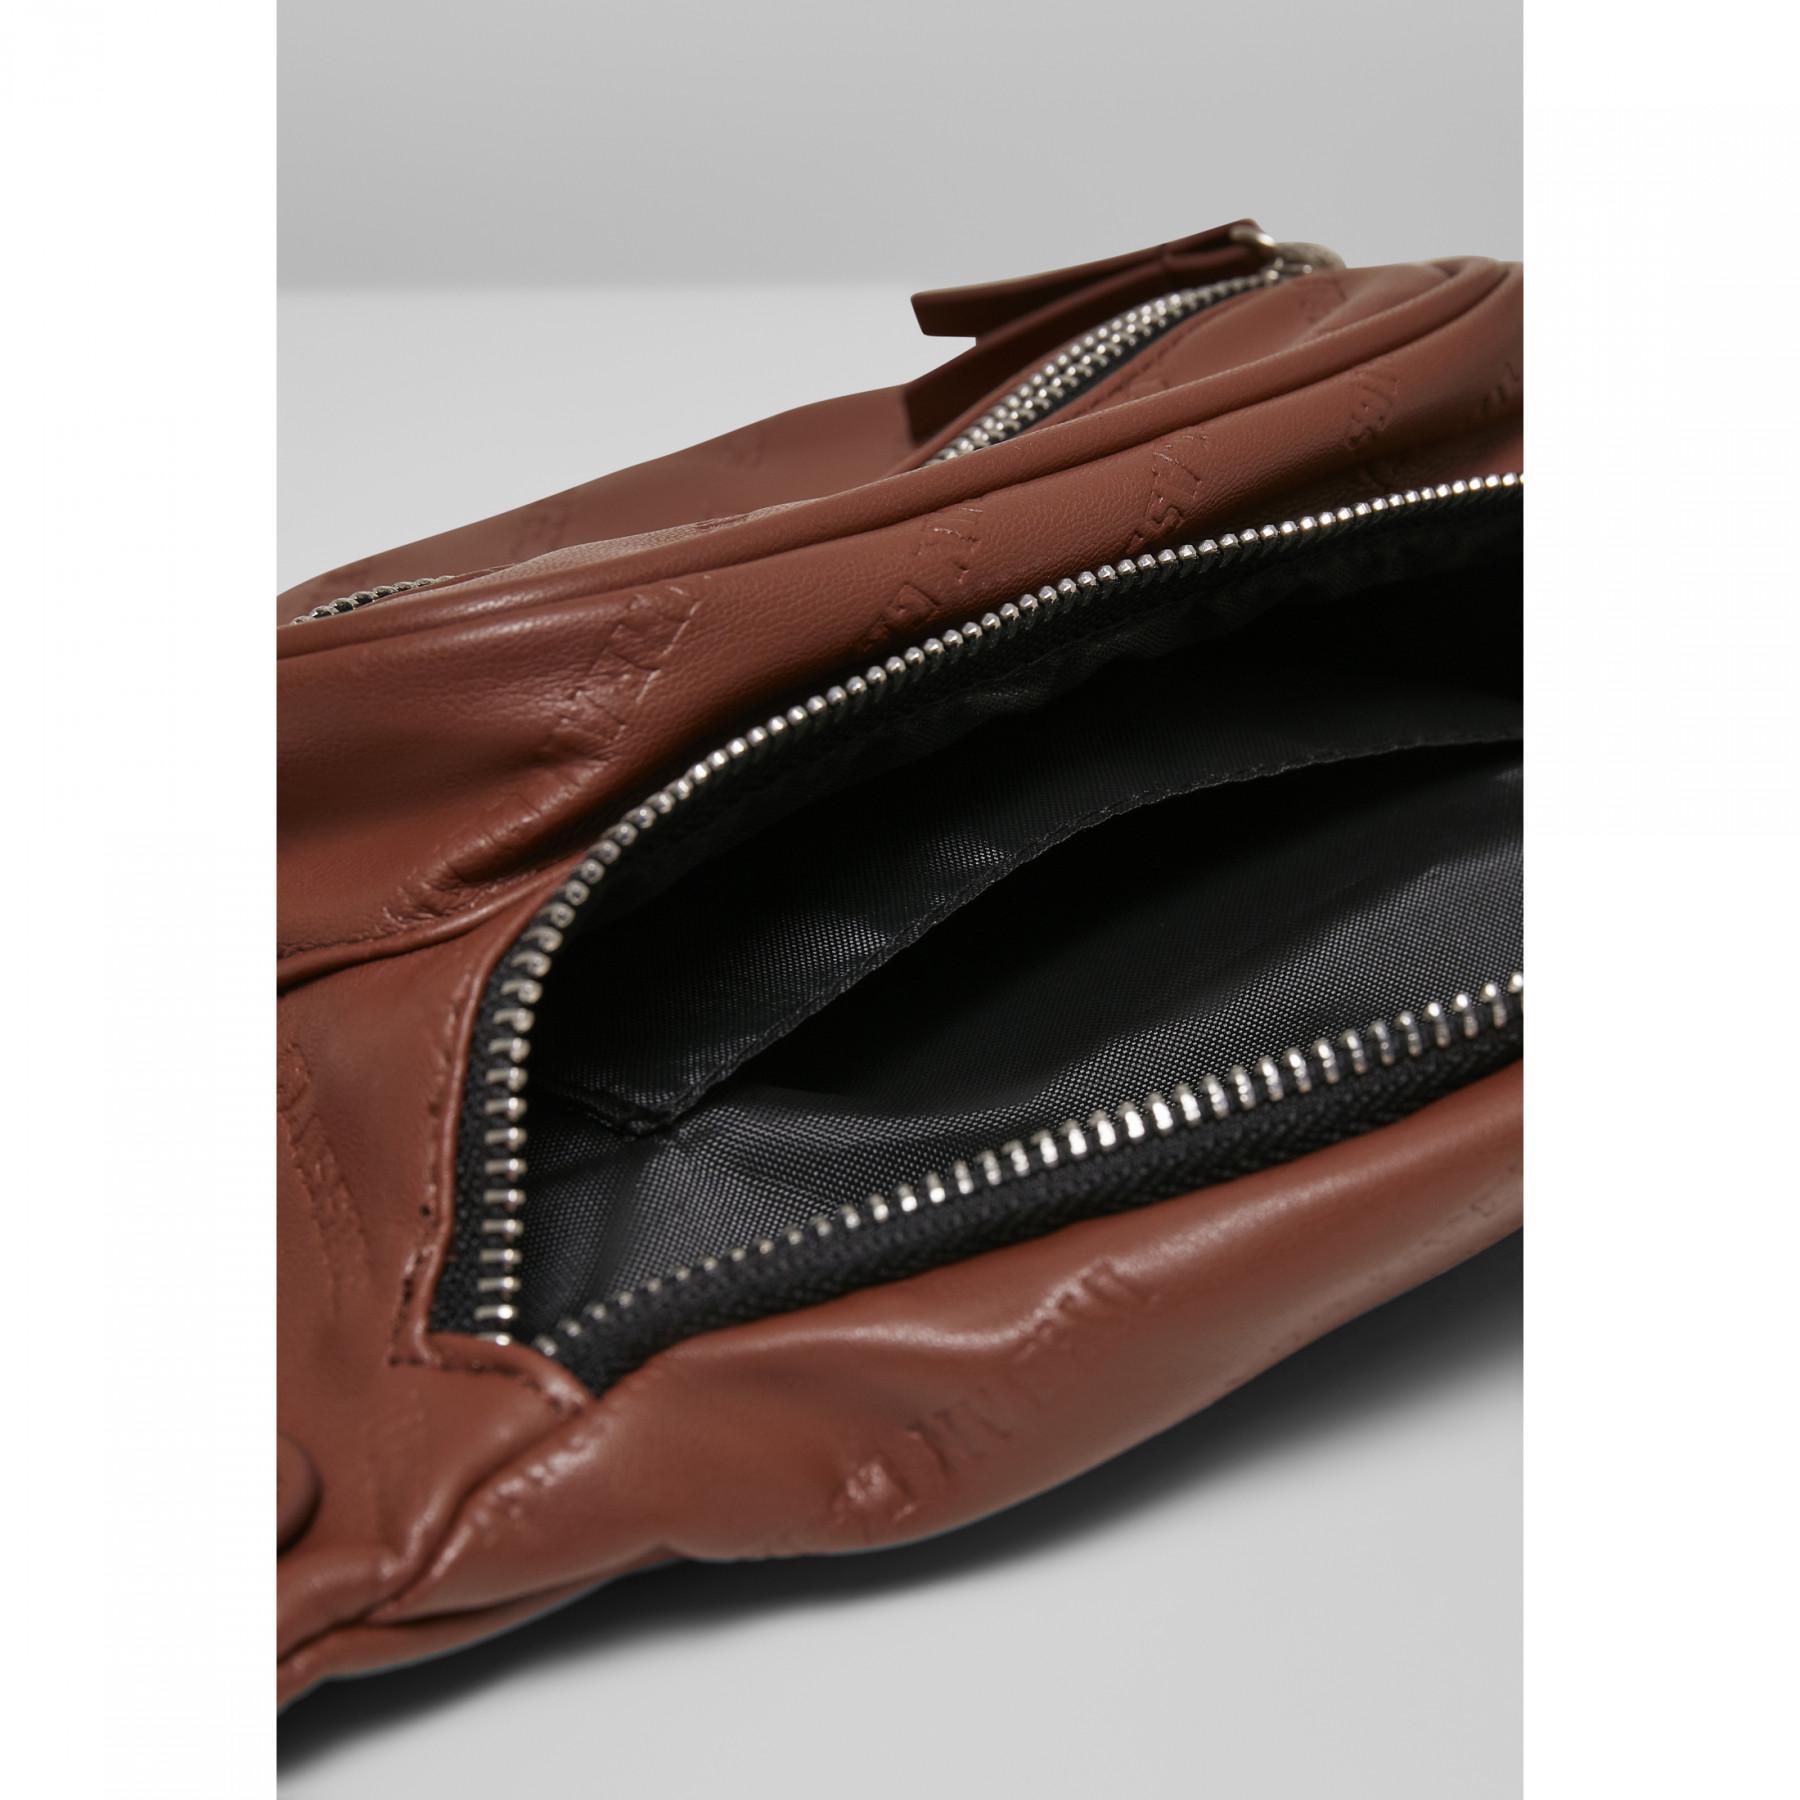 Väska Urban Classics imitation leather